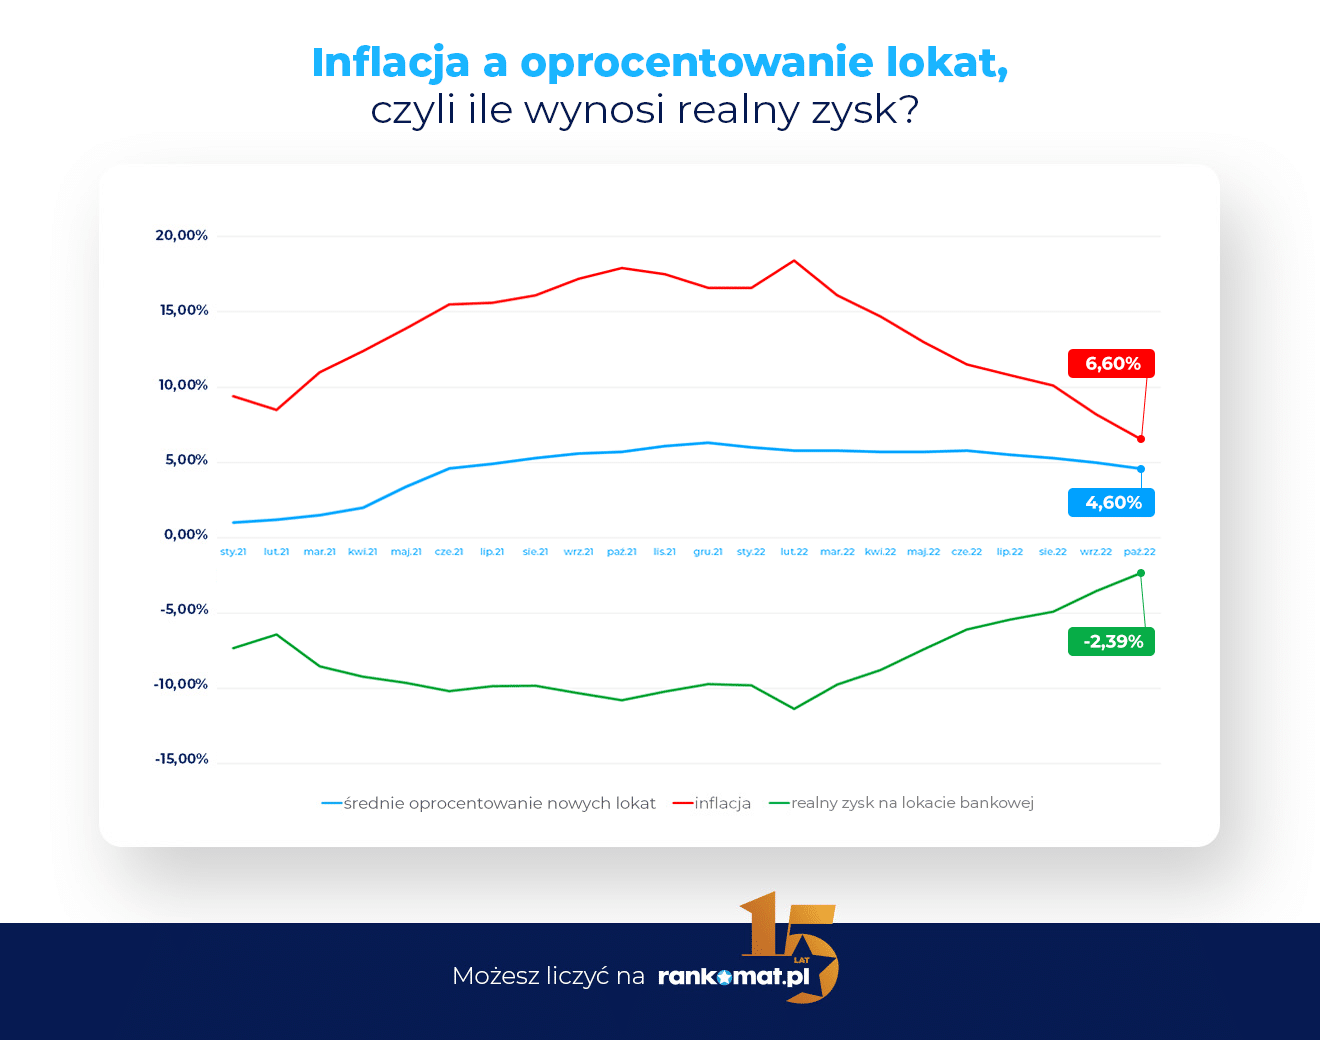 Realny zysk na lokatach bankowych – rankomat.pl